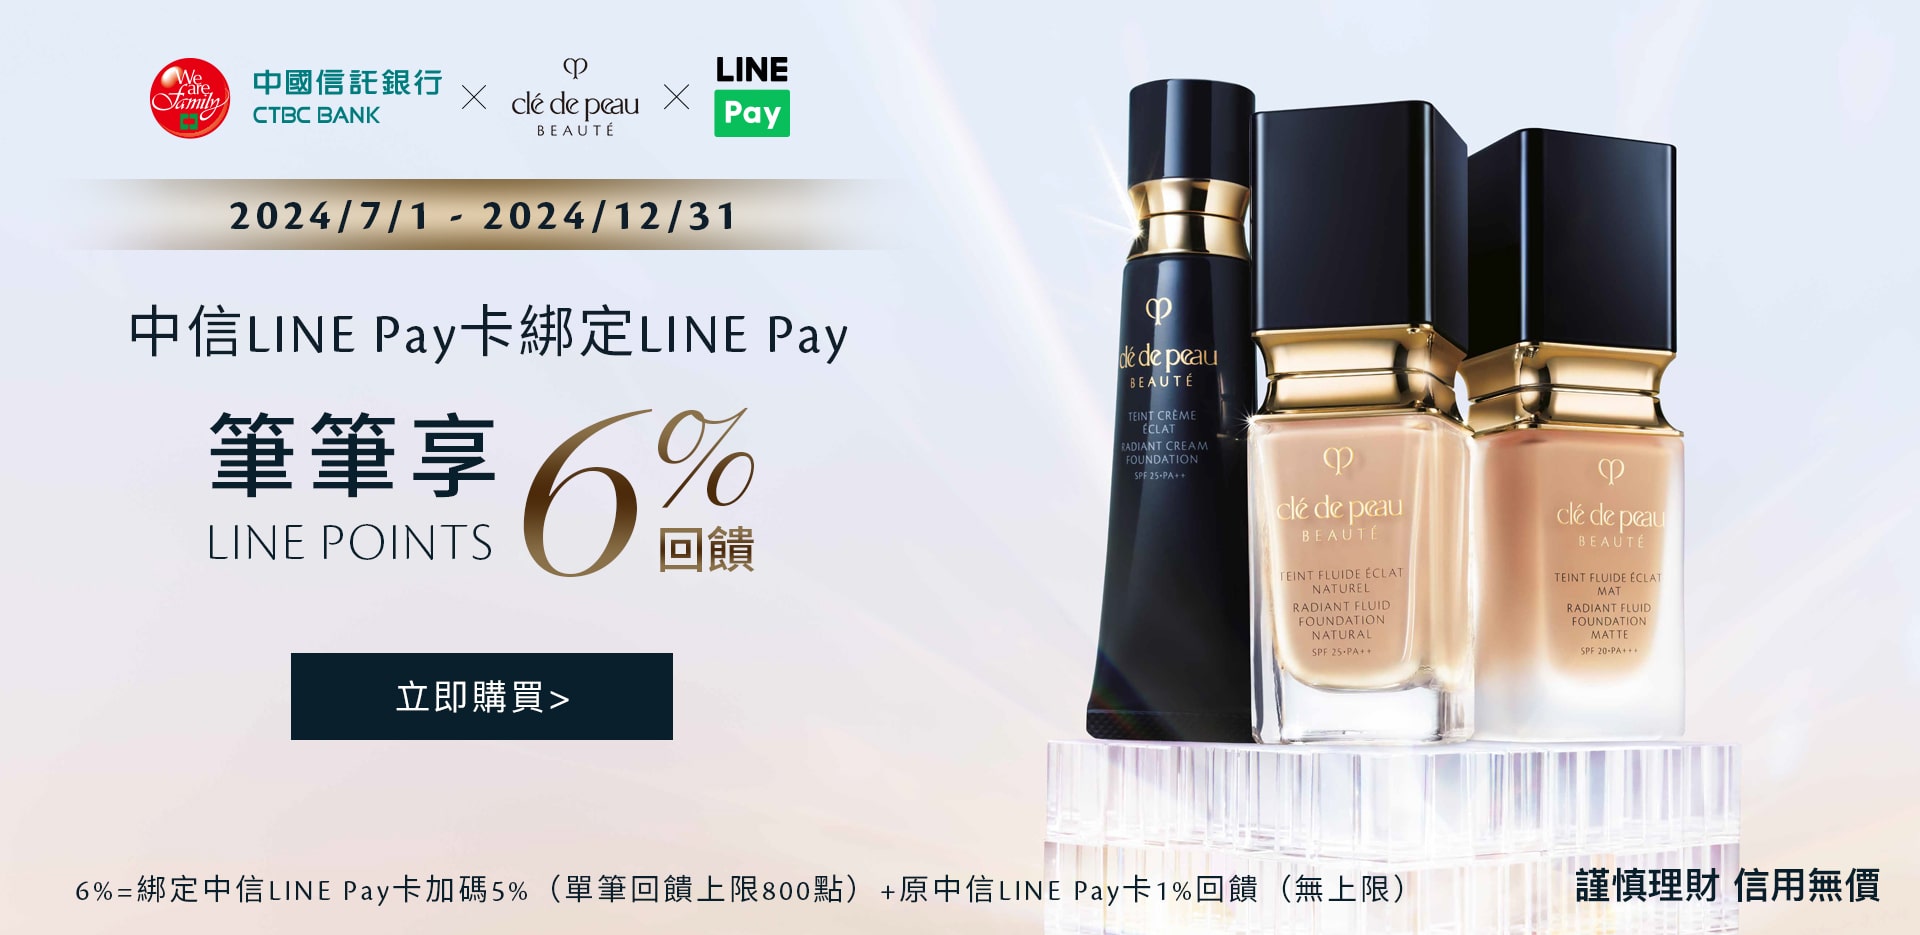 2024/07/01-2024/12/31 LINE Pay綁定中信LINE Pay卡,筆筆享LINE POINTS 6%回饋